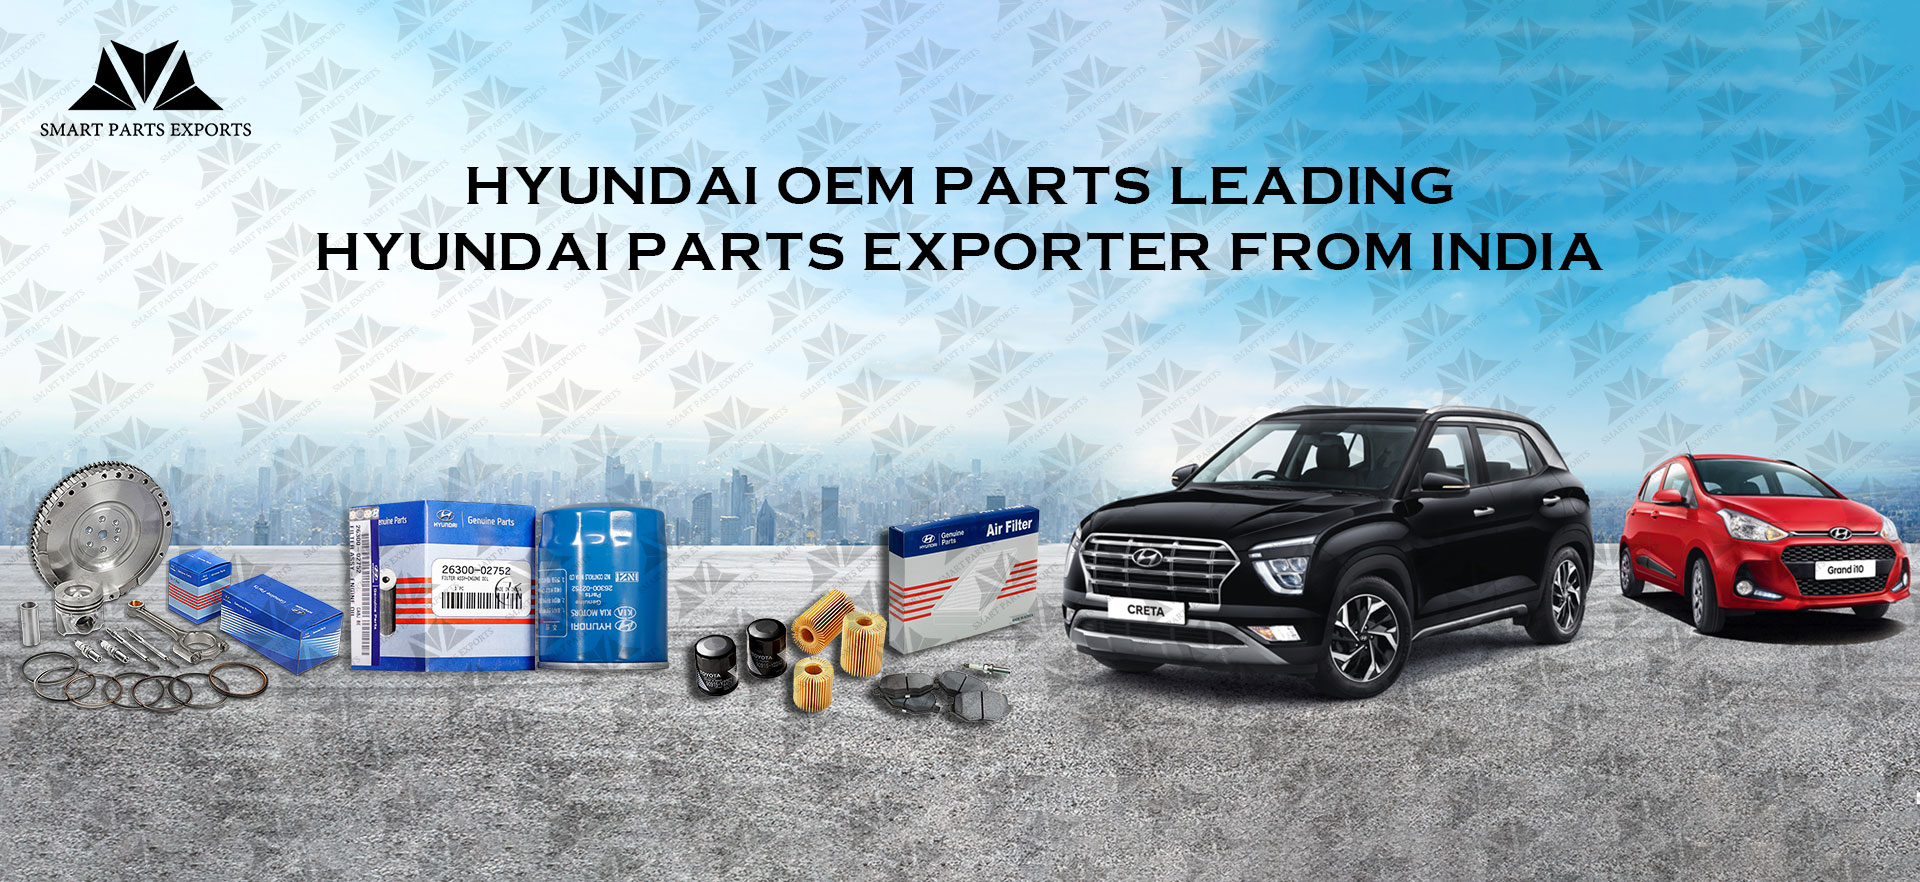 Hyundai OEM Parts: Leading Hyundai Parts Exporter from India